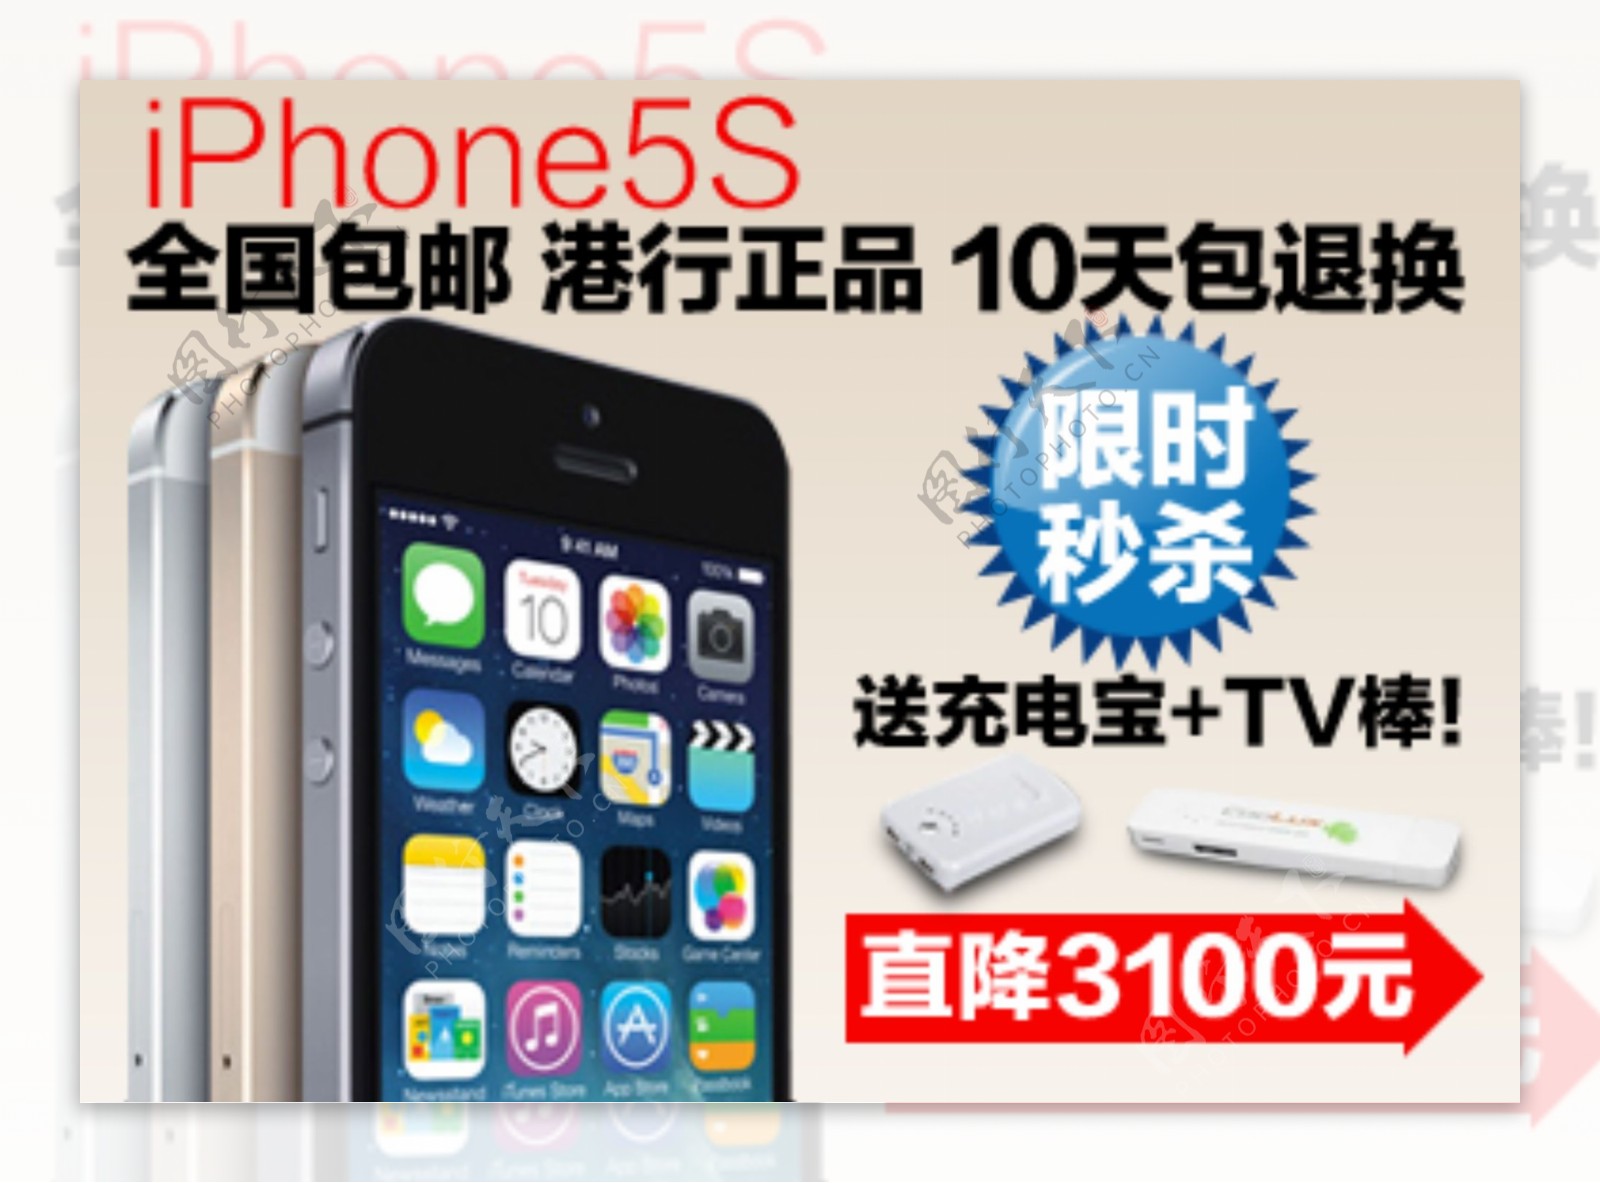 iPhone5s苹果手机促销图广告图推广